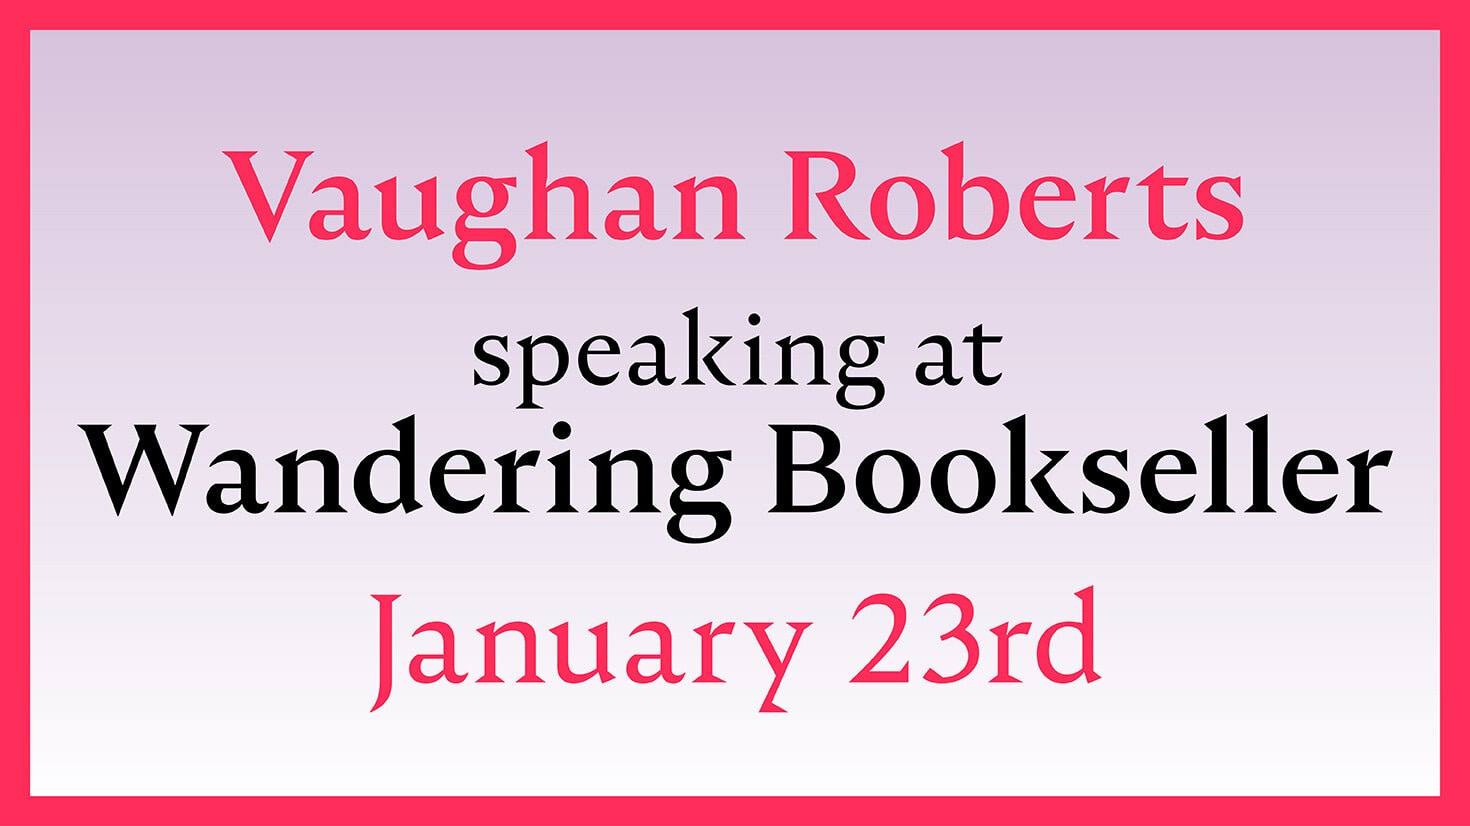 Vaughan Roberts speaking at Wandering Bookseller, in Katoomba, Australia, on January 23rd